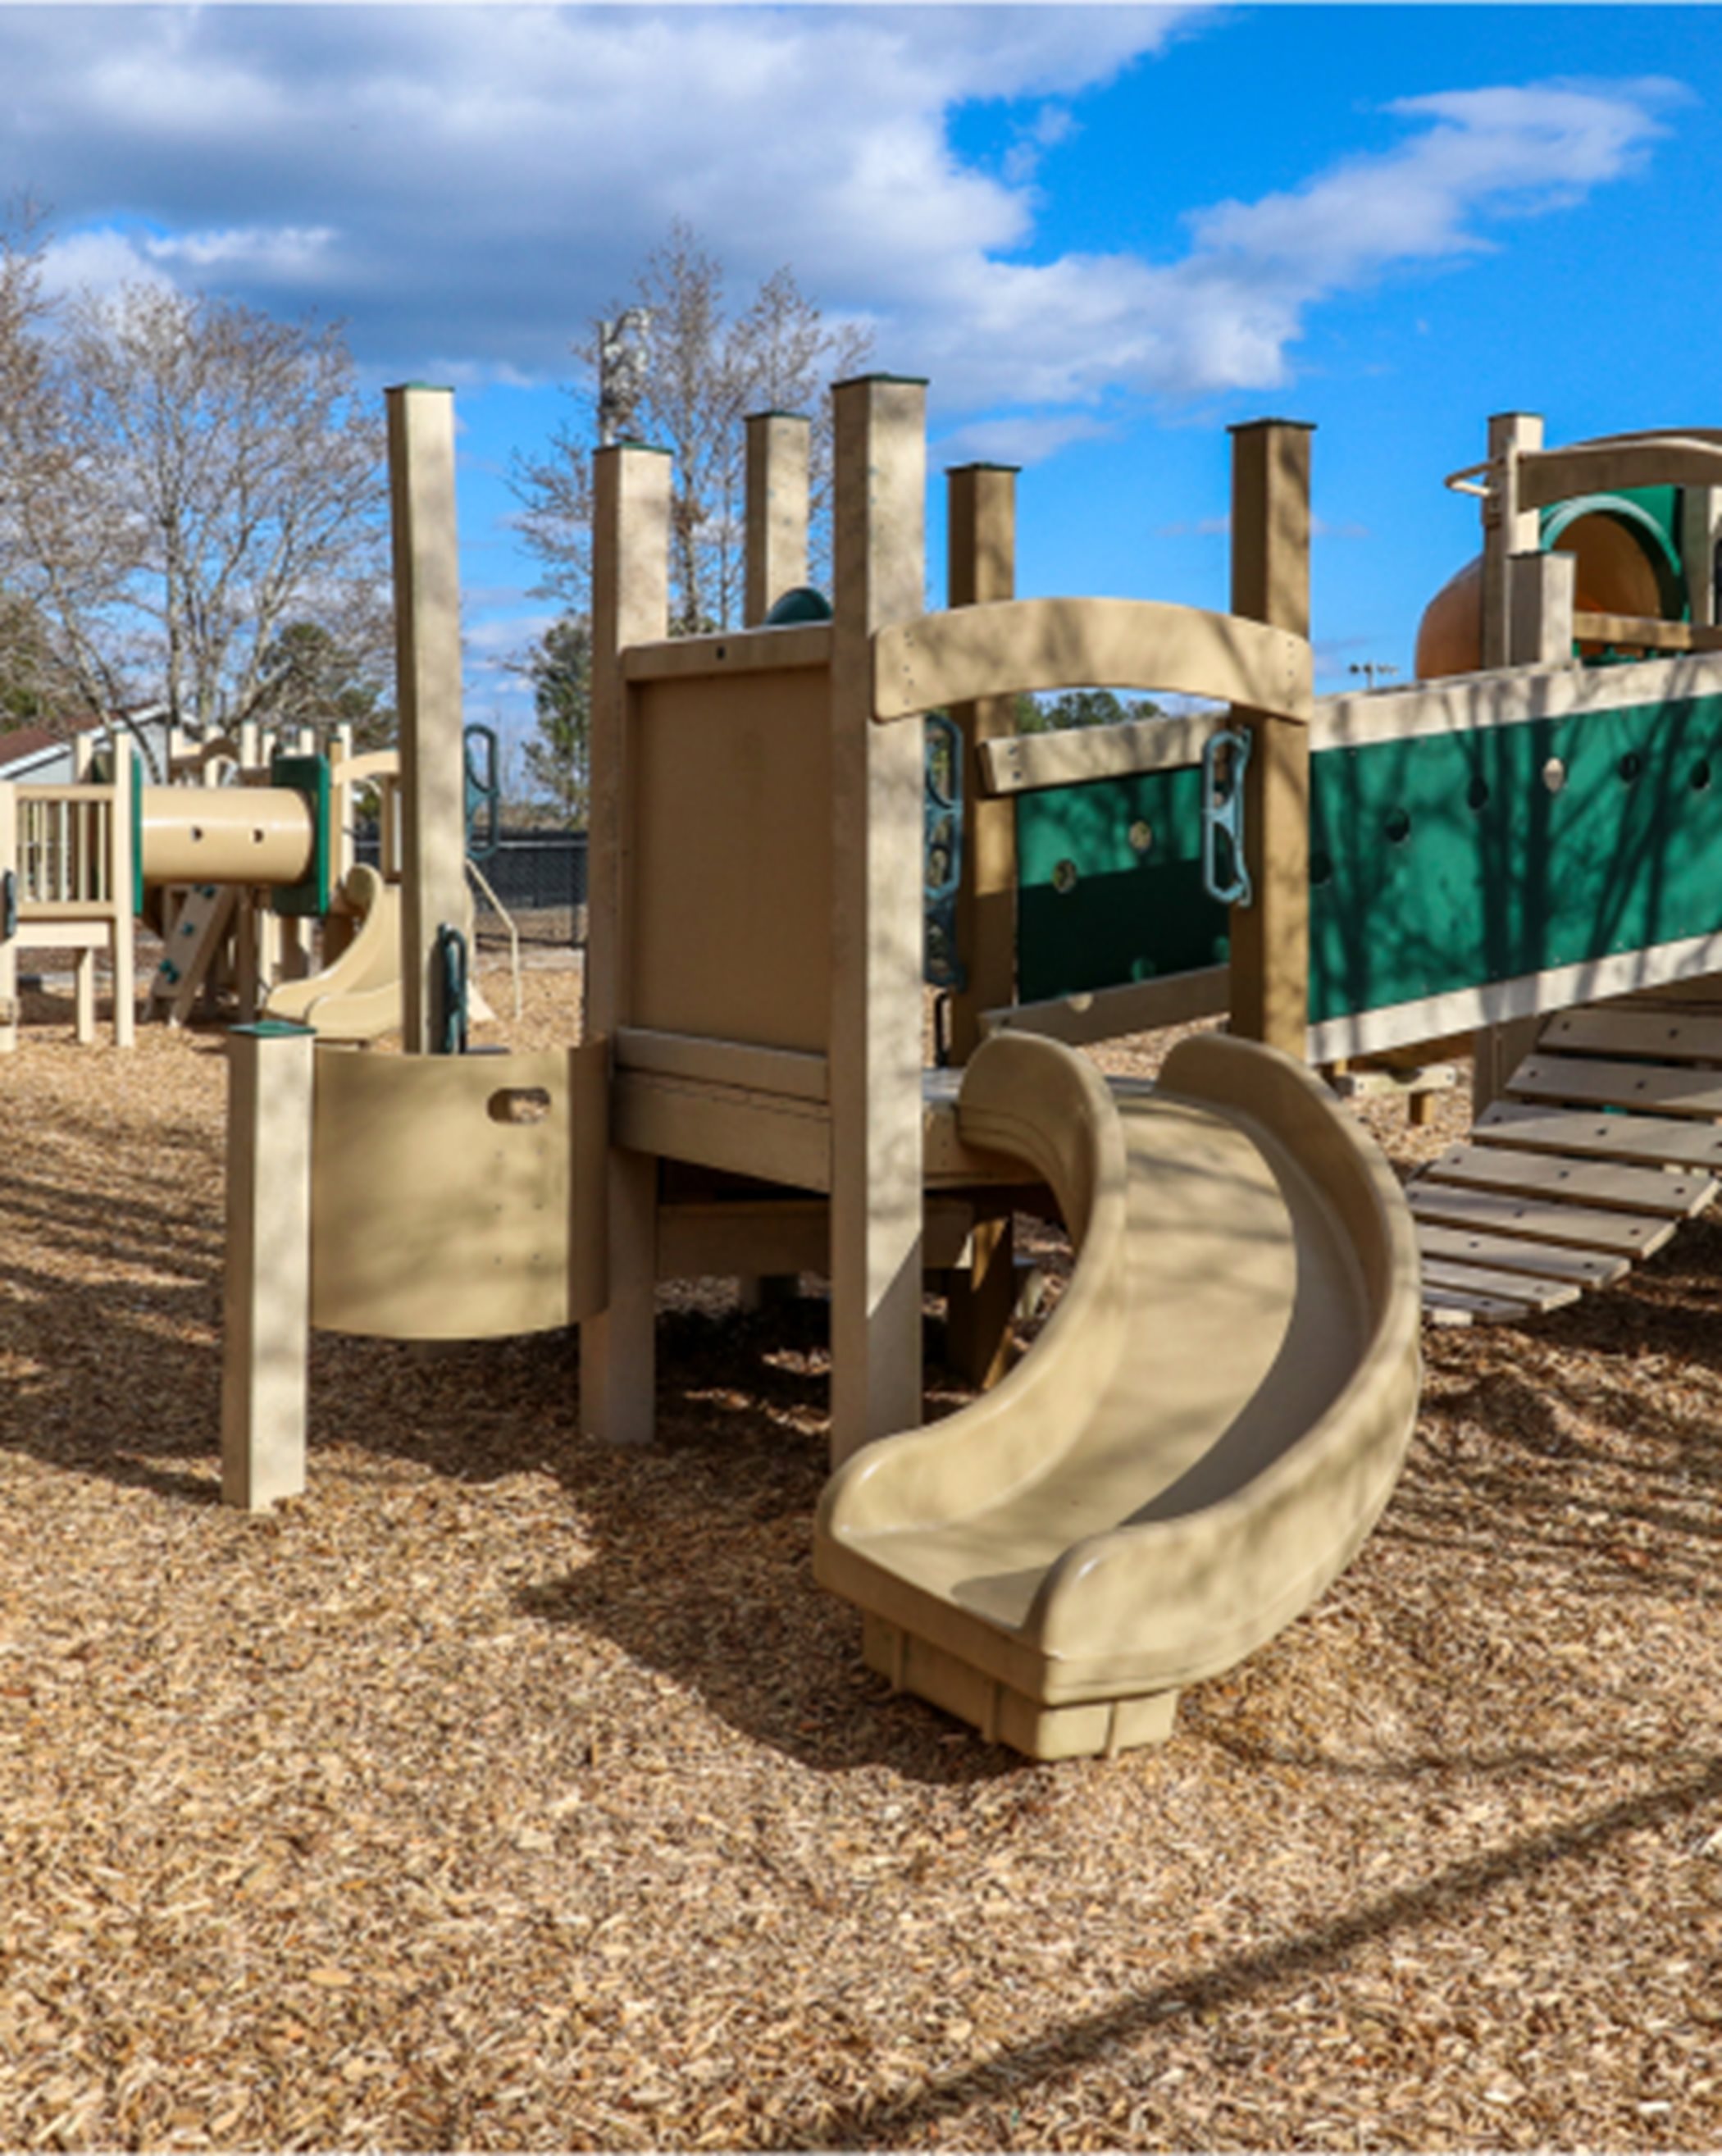 Playground at Lake Benson Park